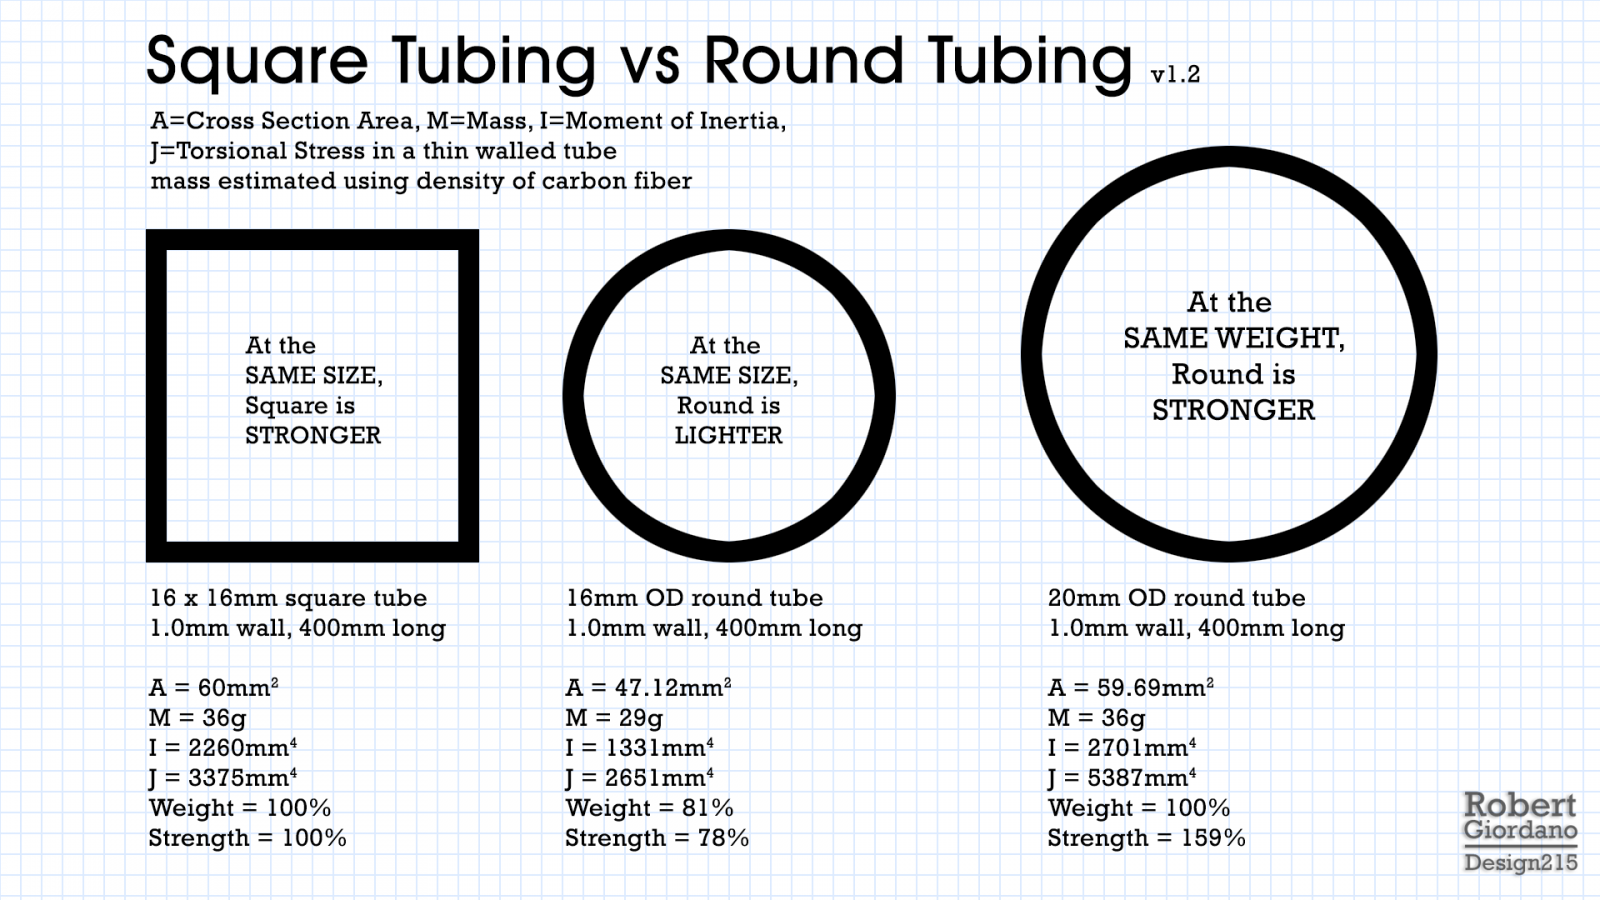 Square vs Round tubing by Robert Giordano